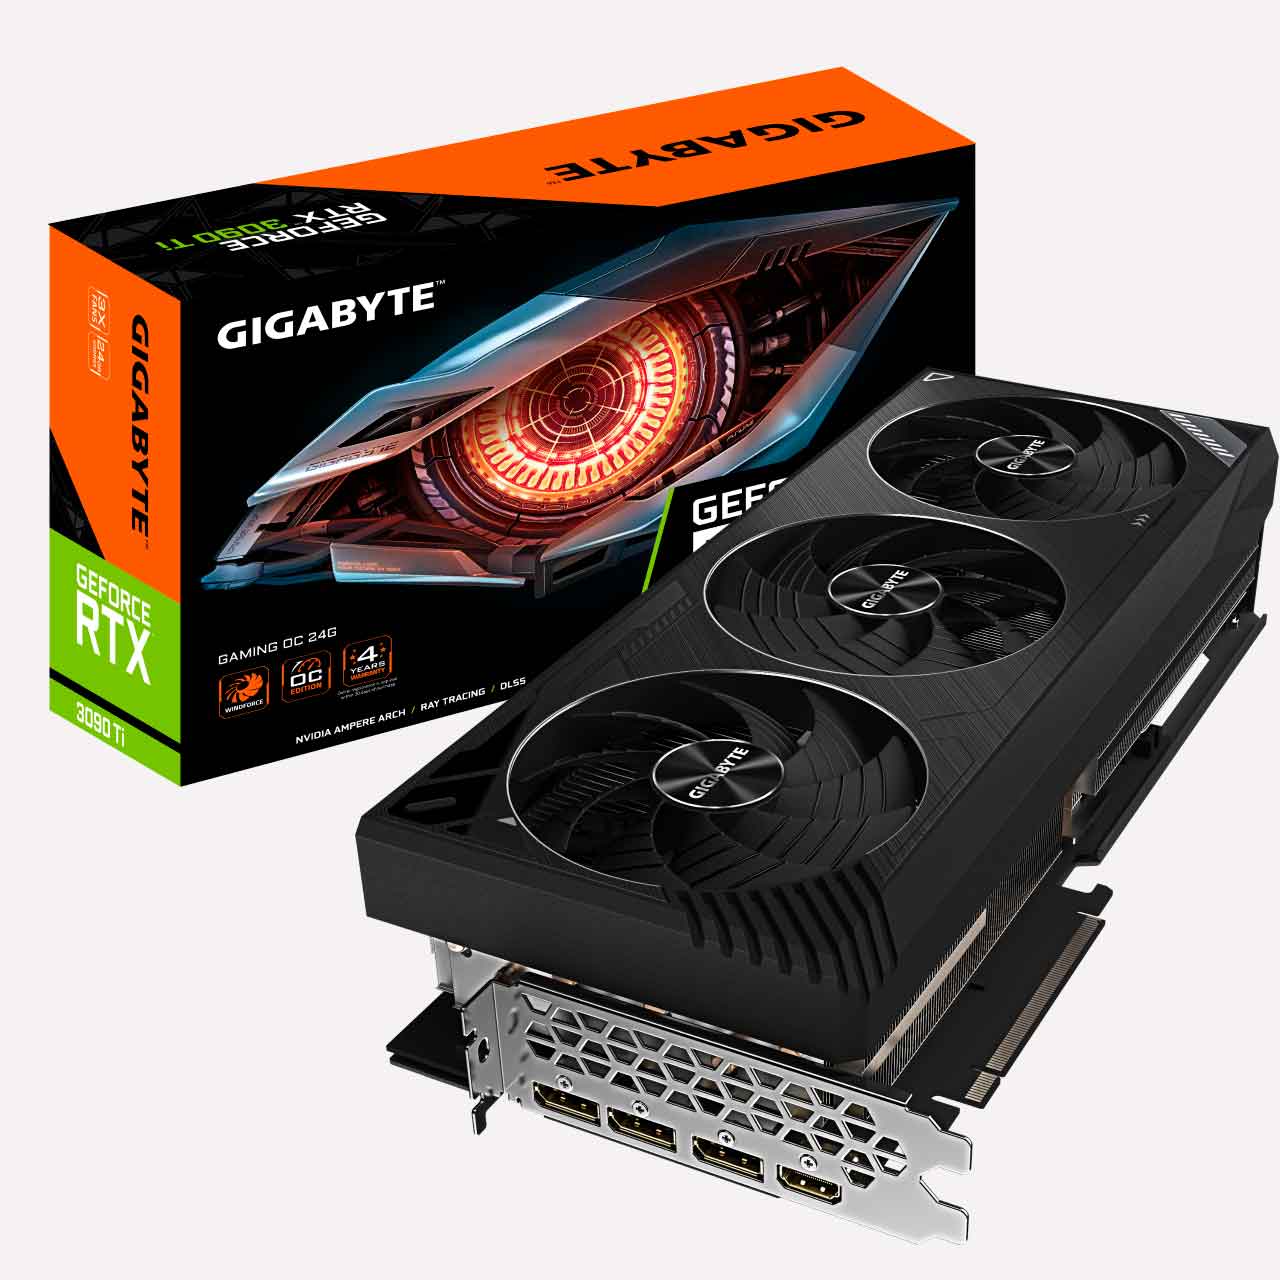 Gigabyte presents its GeForce RTX 3090 Ti